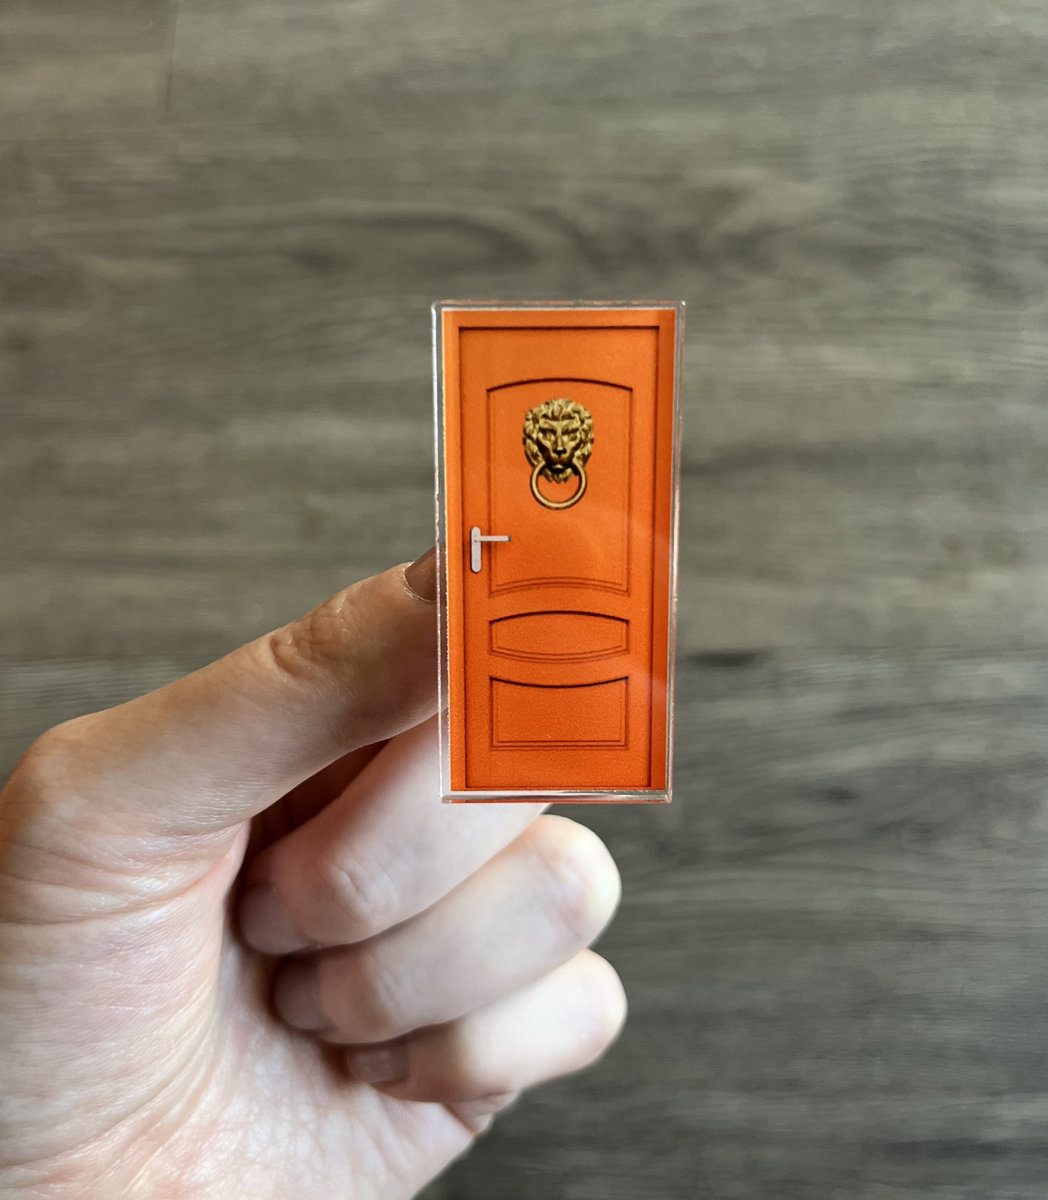 Knock on the Orange Door ピン